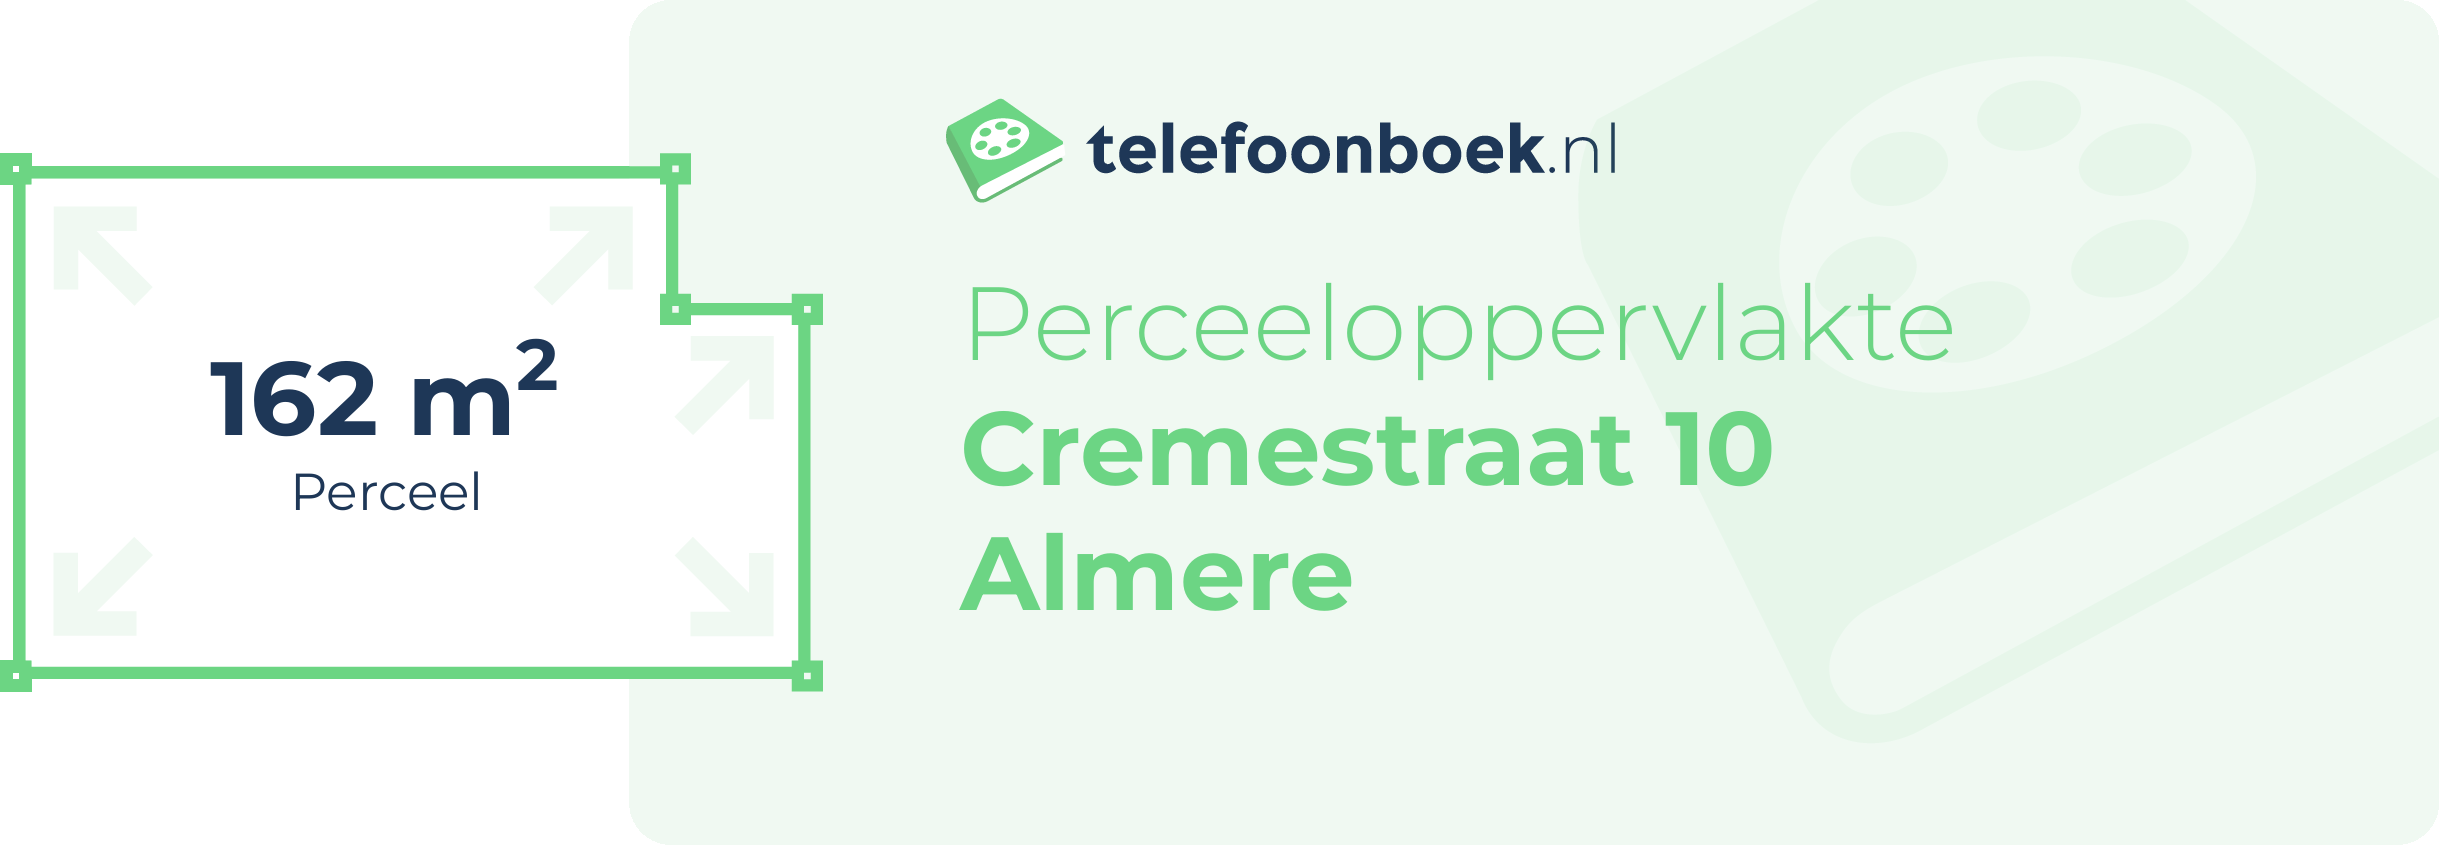 Perceeloppervlakte Cremestraat 10 Almere